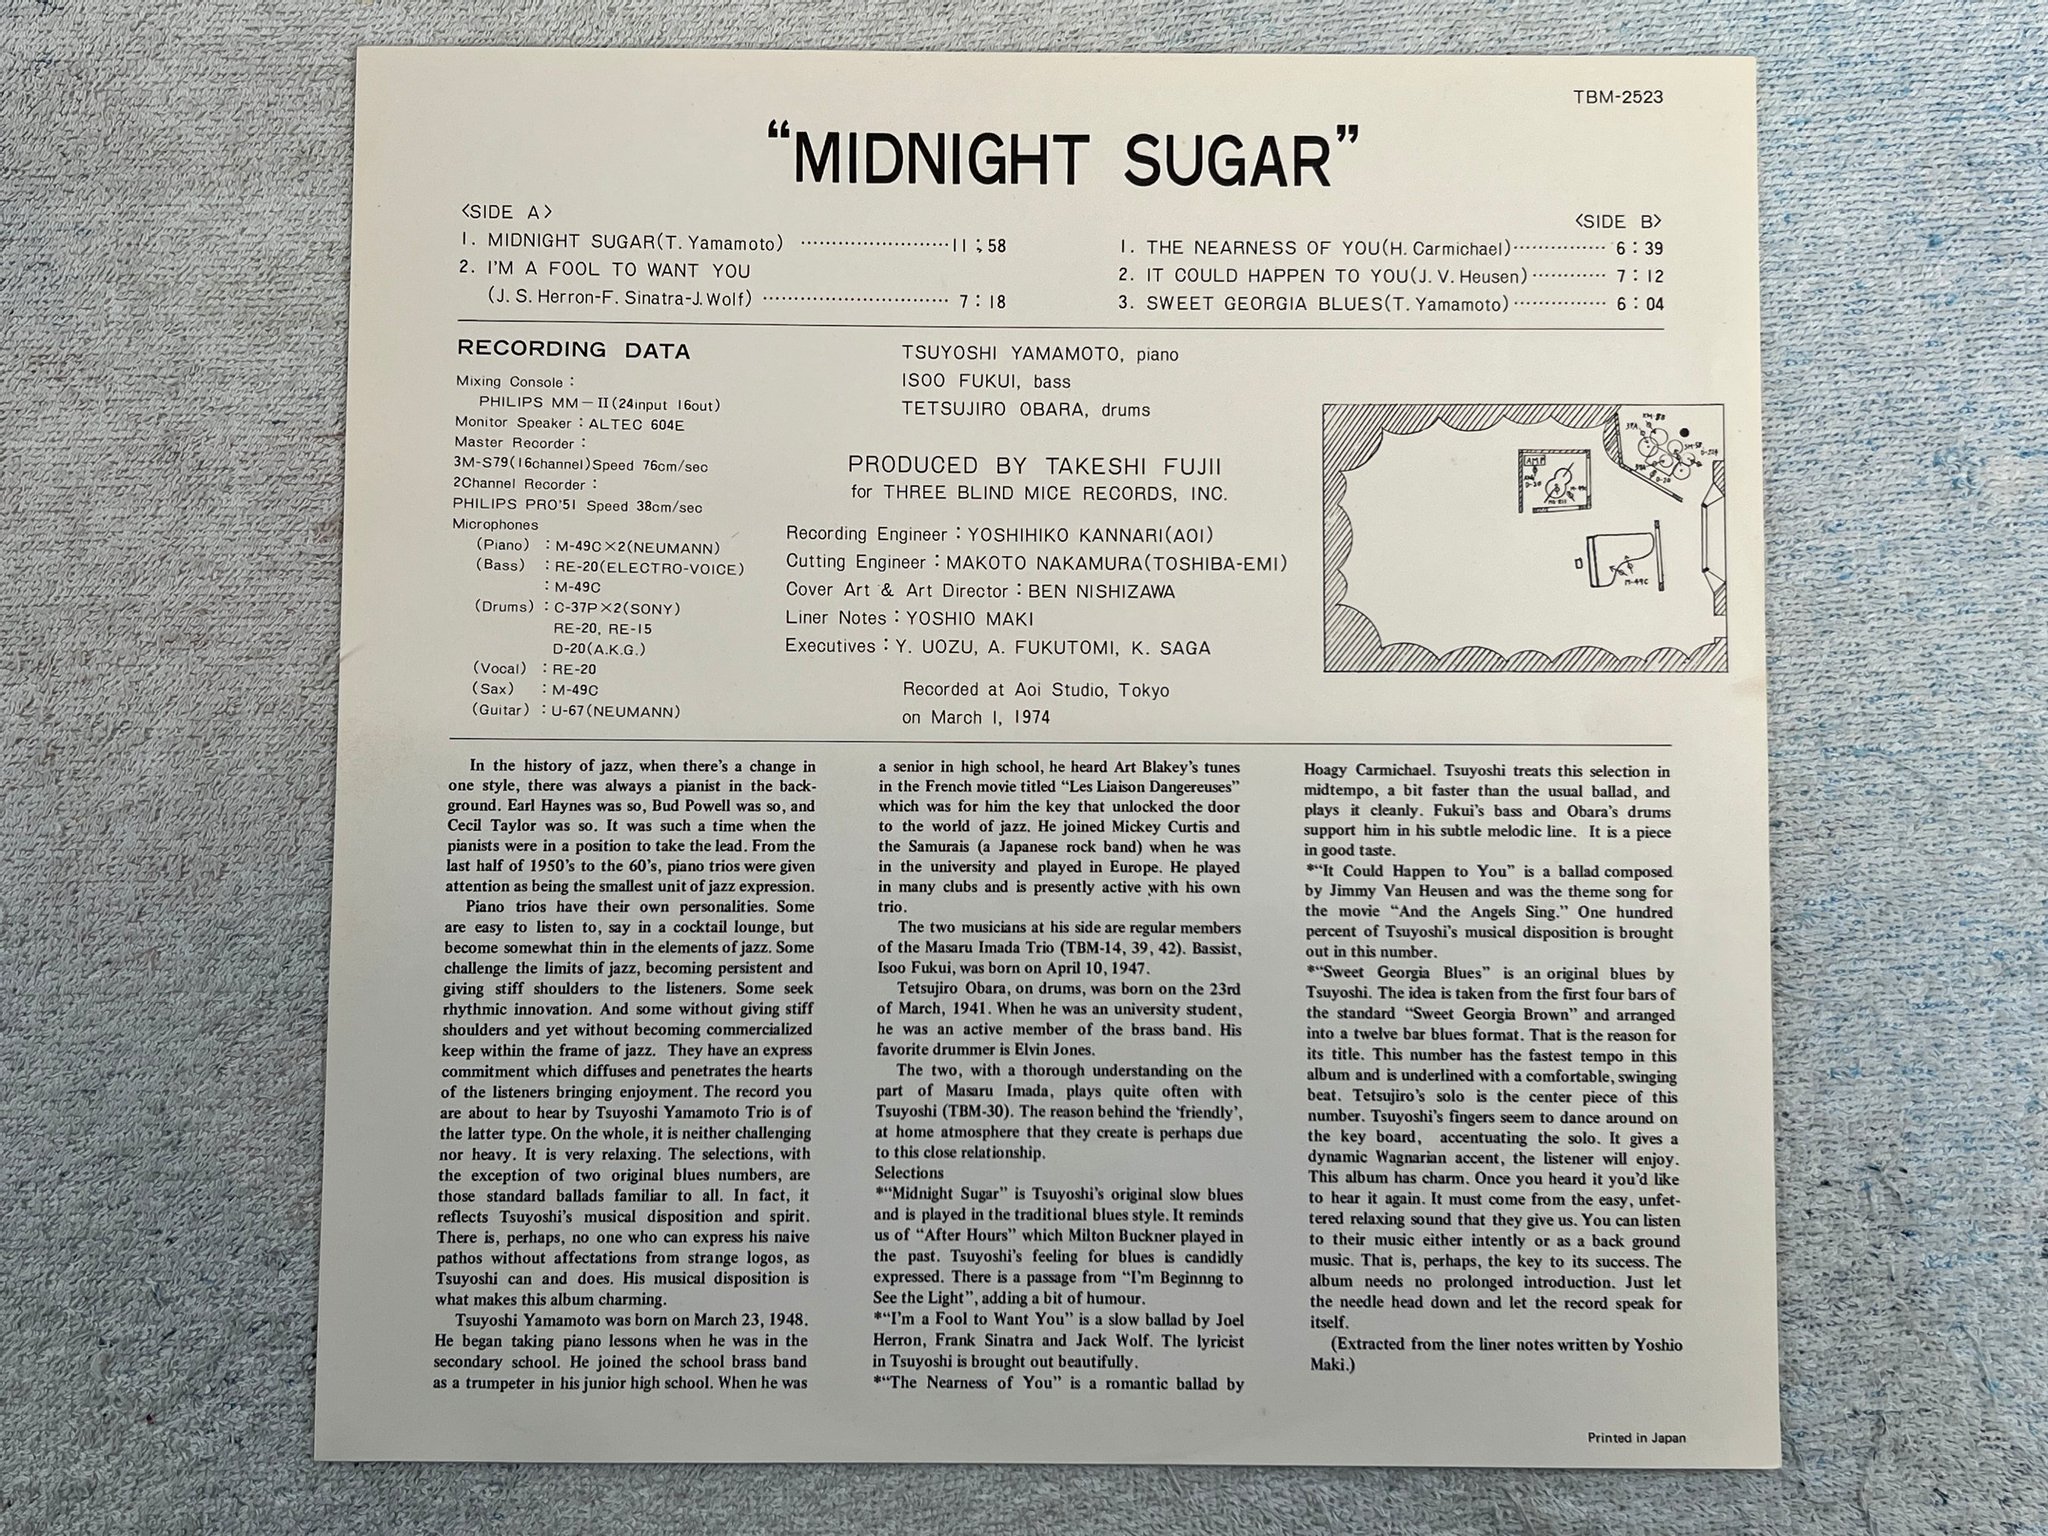 Omslagsbild för skivan TSUYOSHI YAMAMOTO TRIO midnight sugar LP -74 Japan THREE BLIND MICE TBM-23